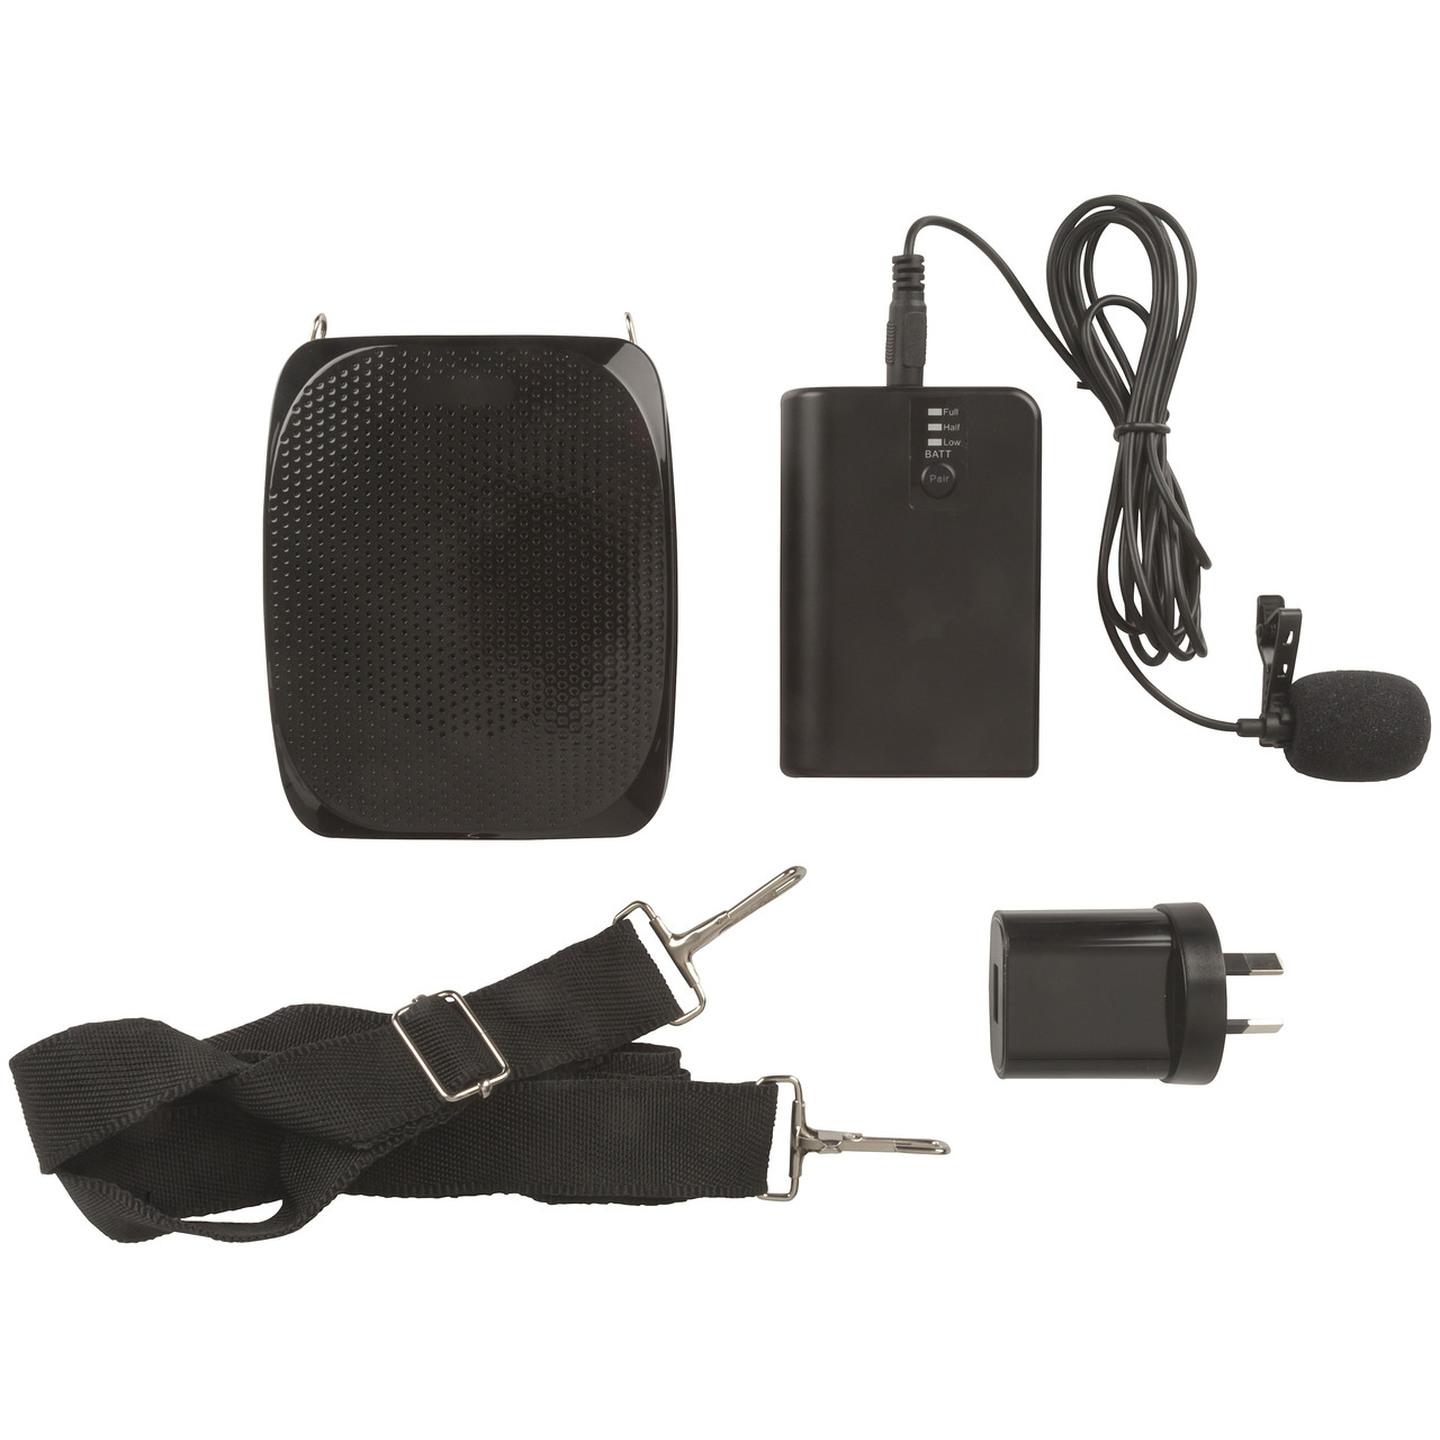 Digitech Portable Wireless UHF Lapel Microphone System